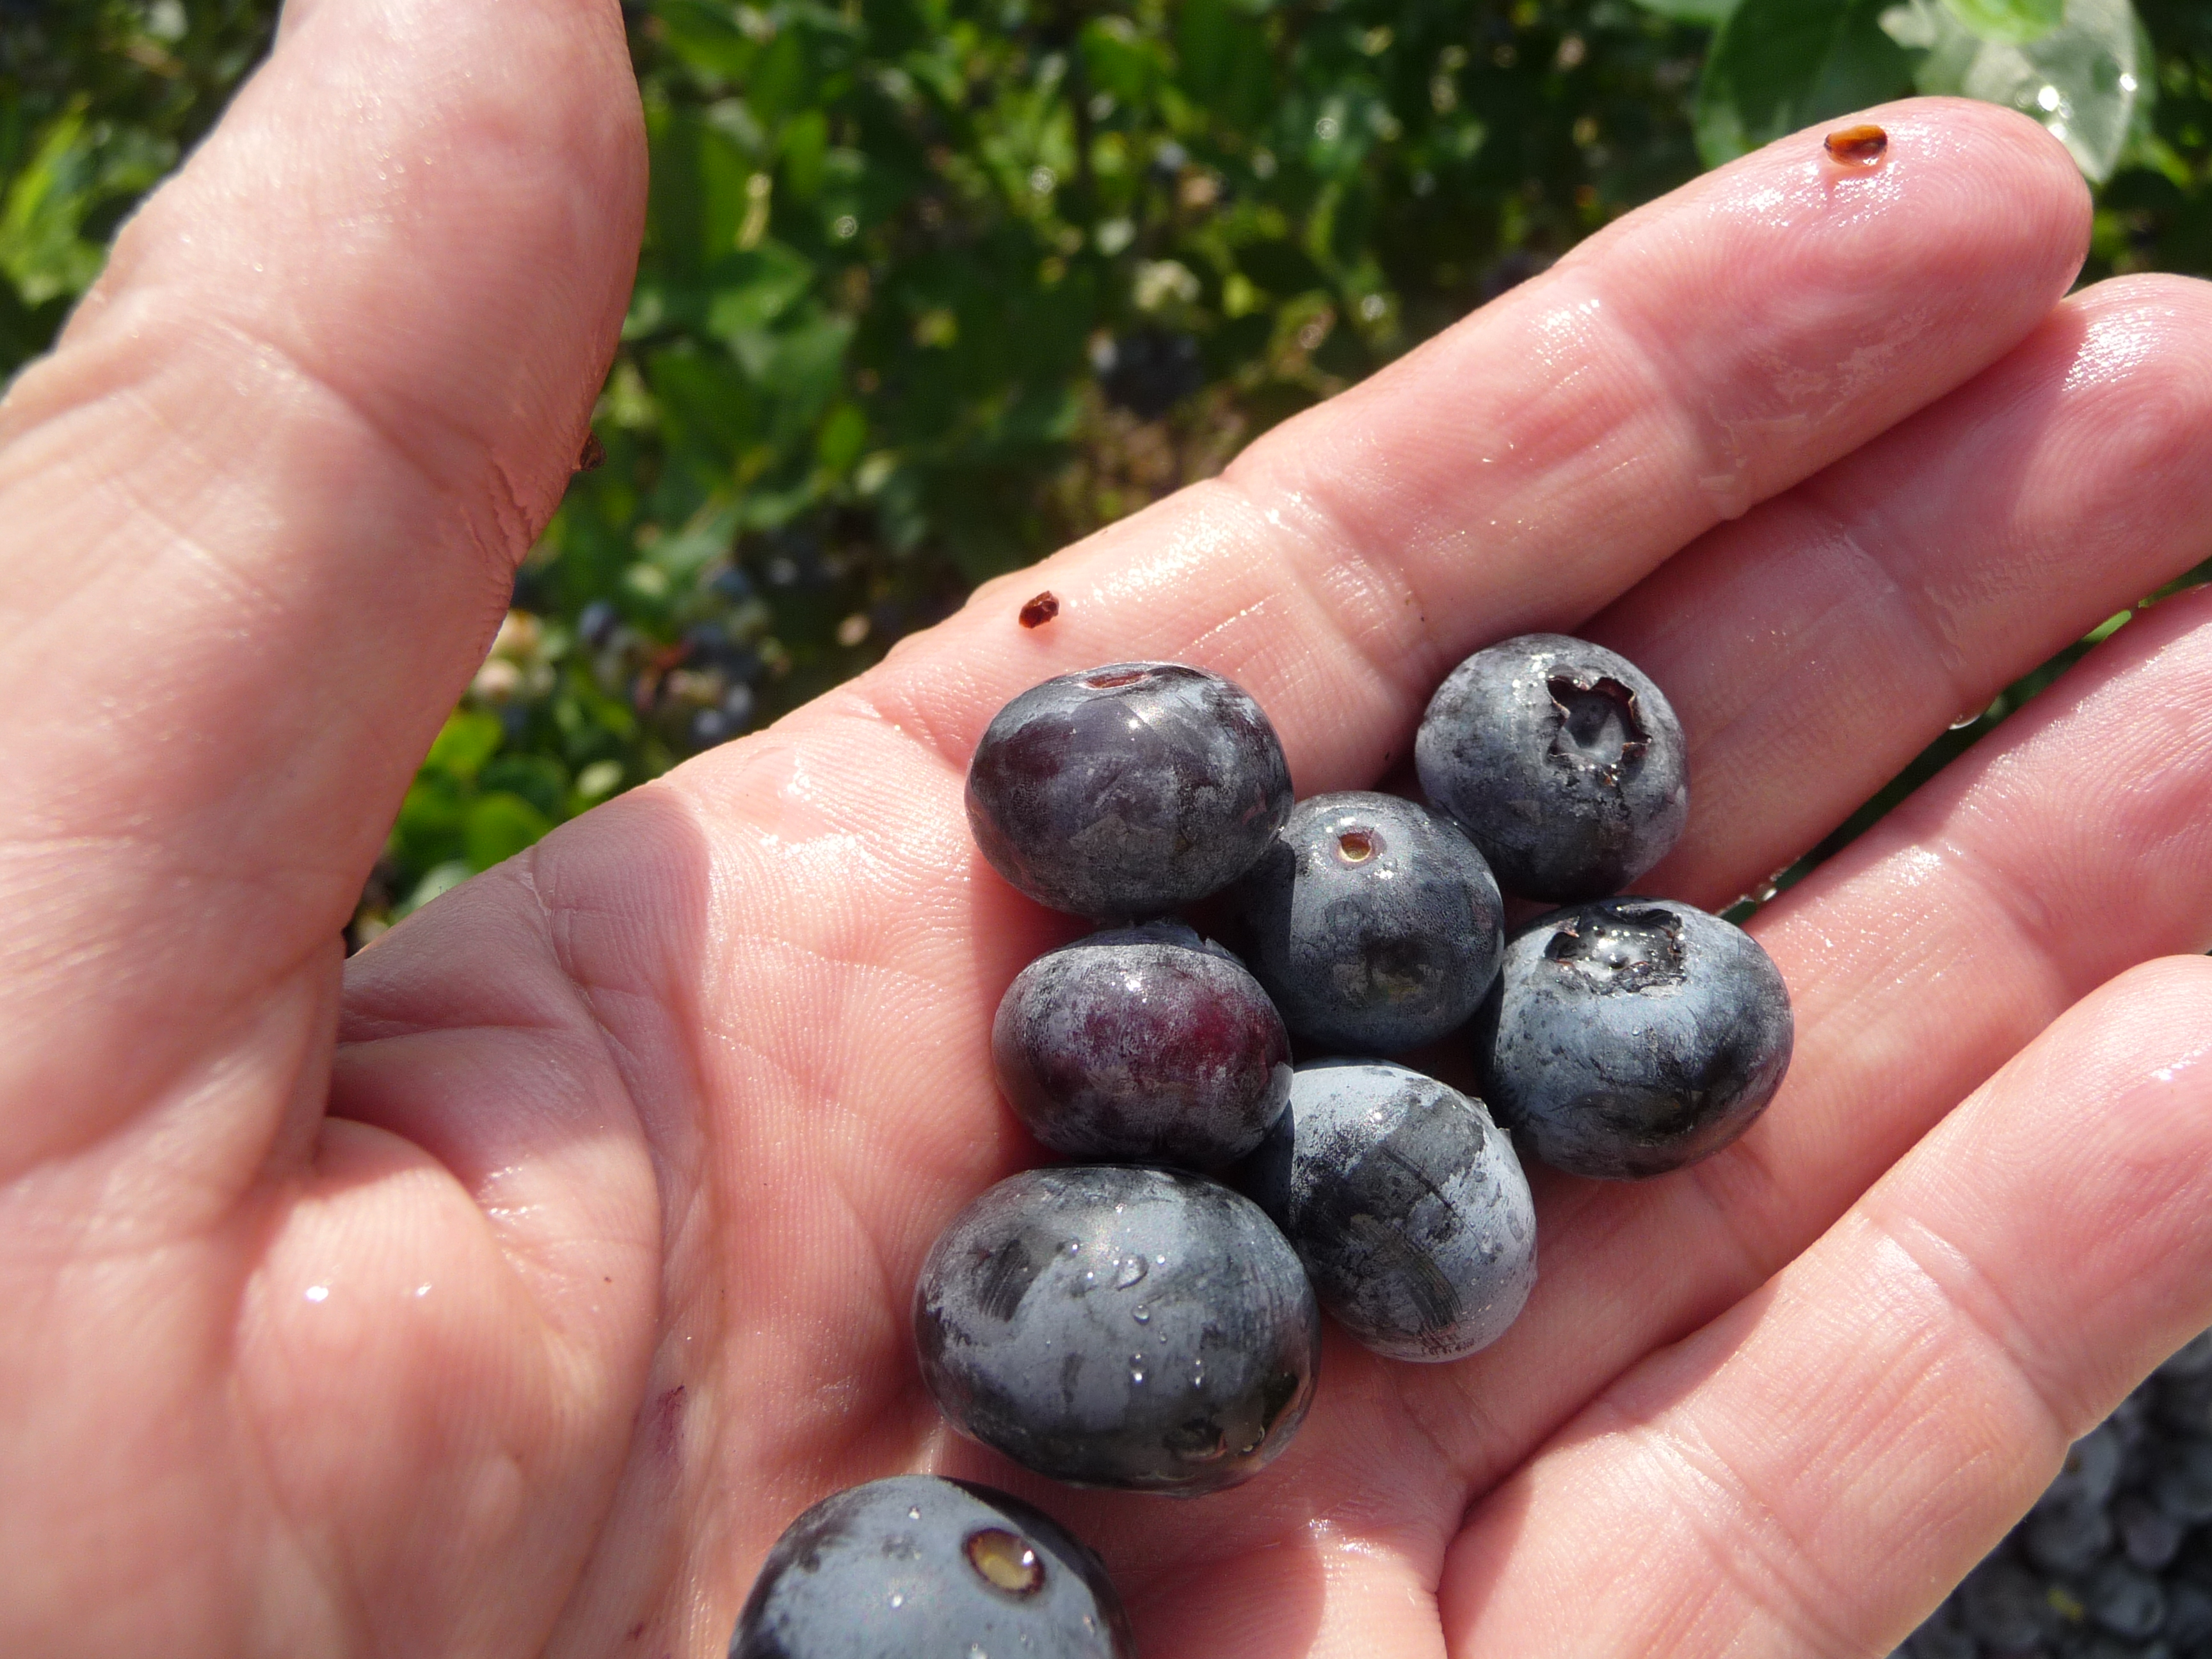 Picking blueberries in June